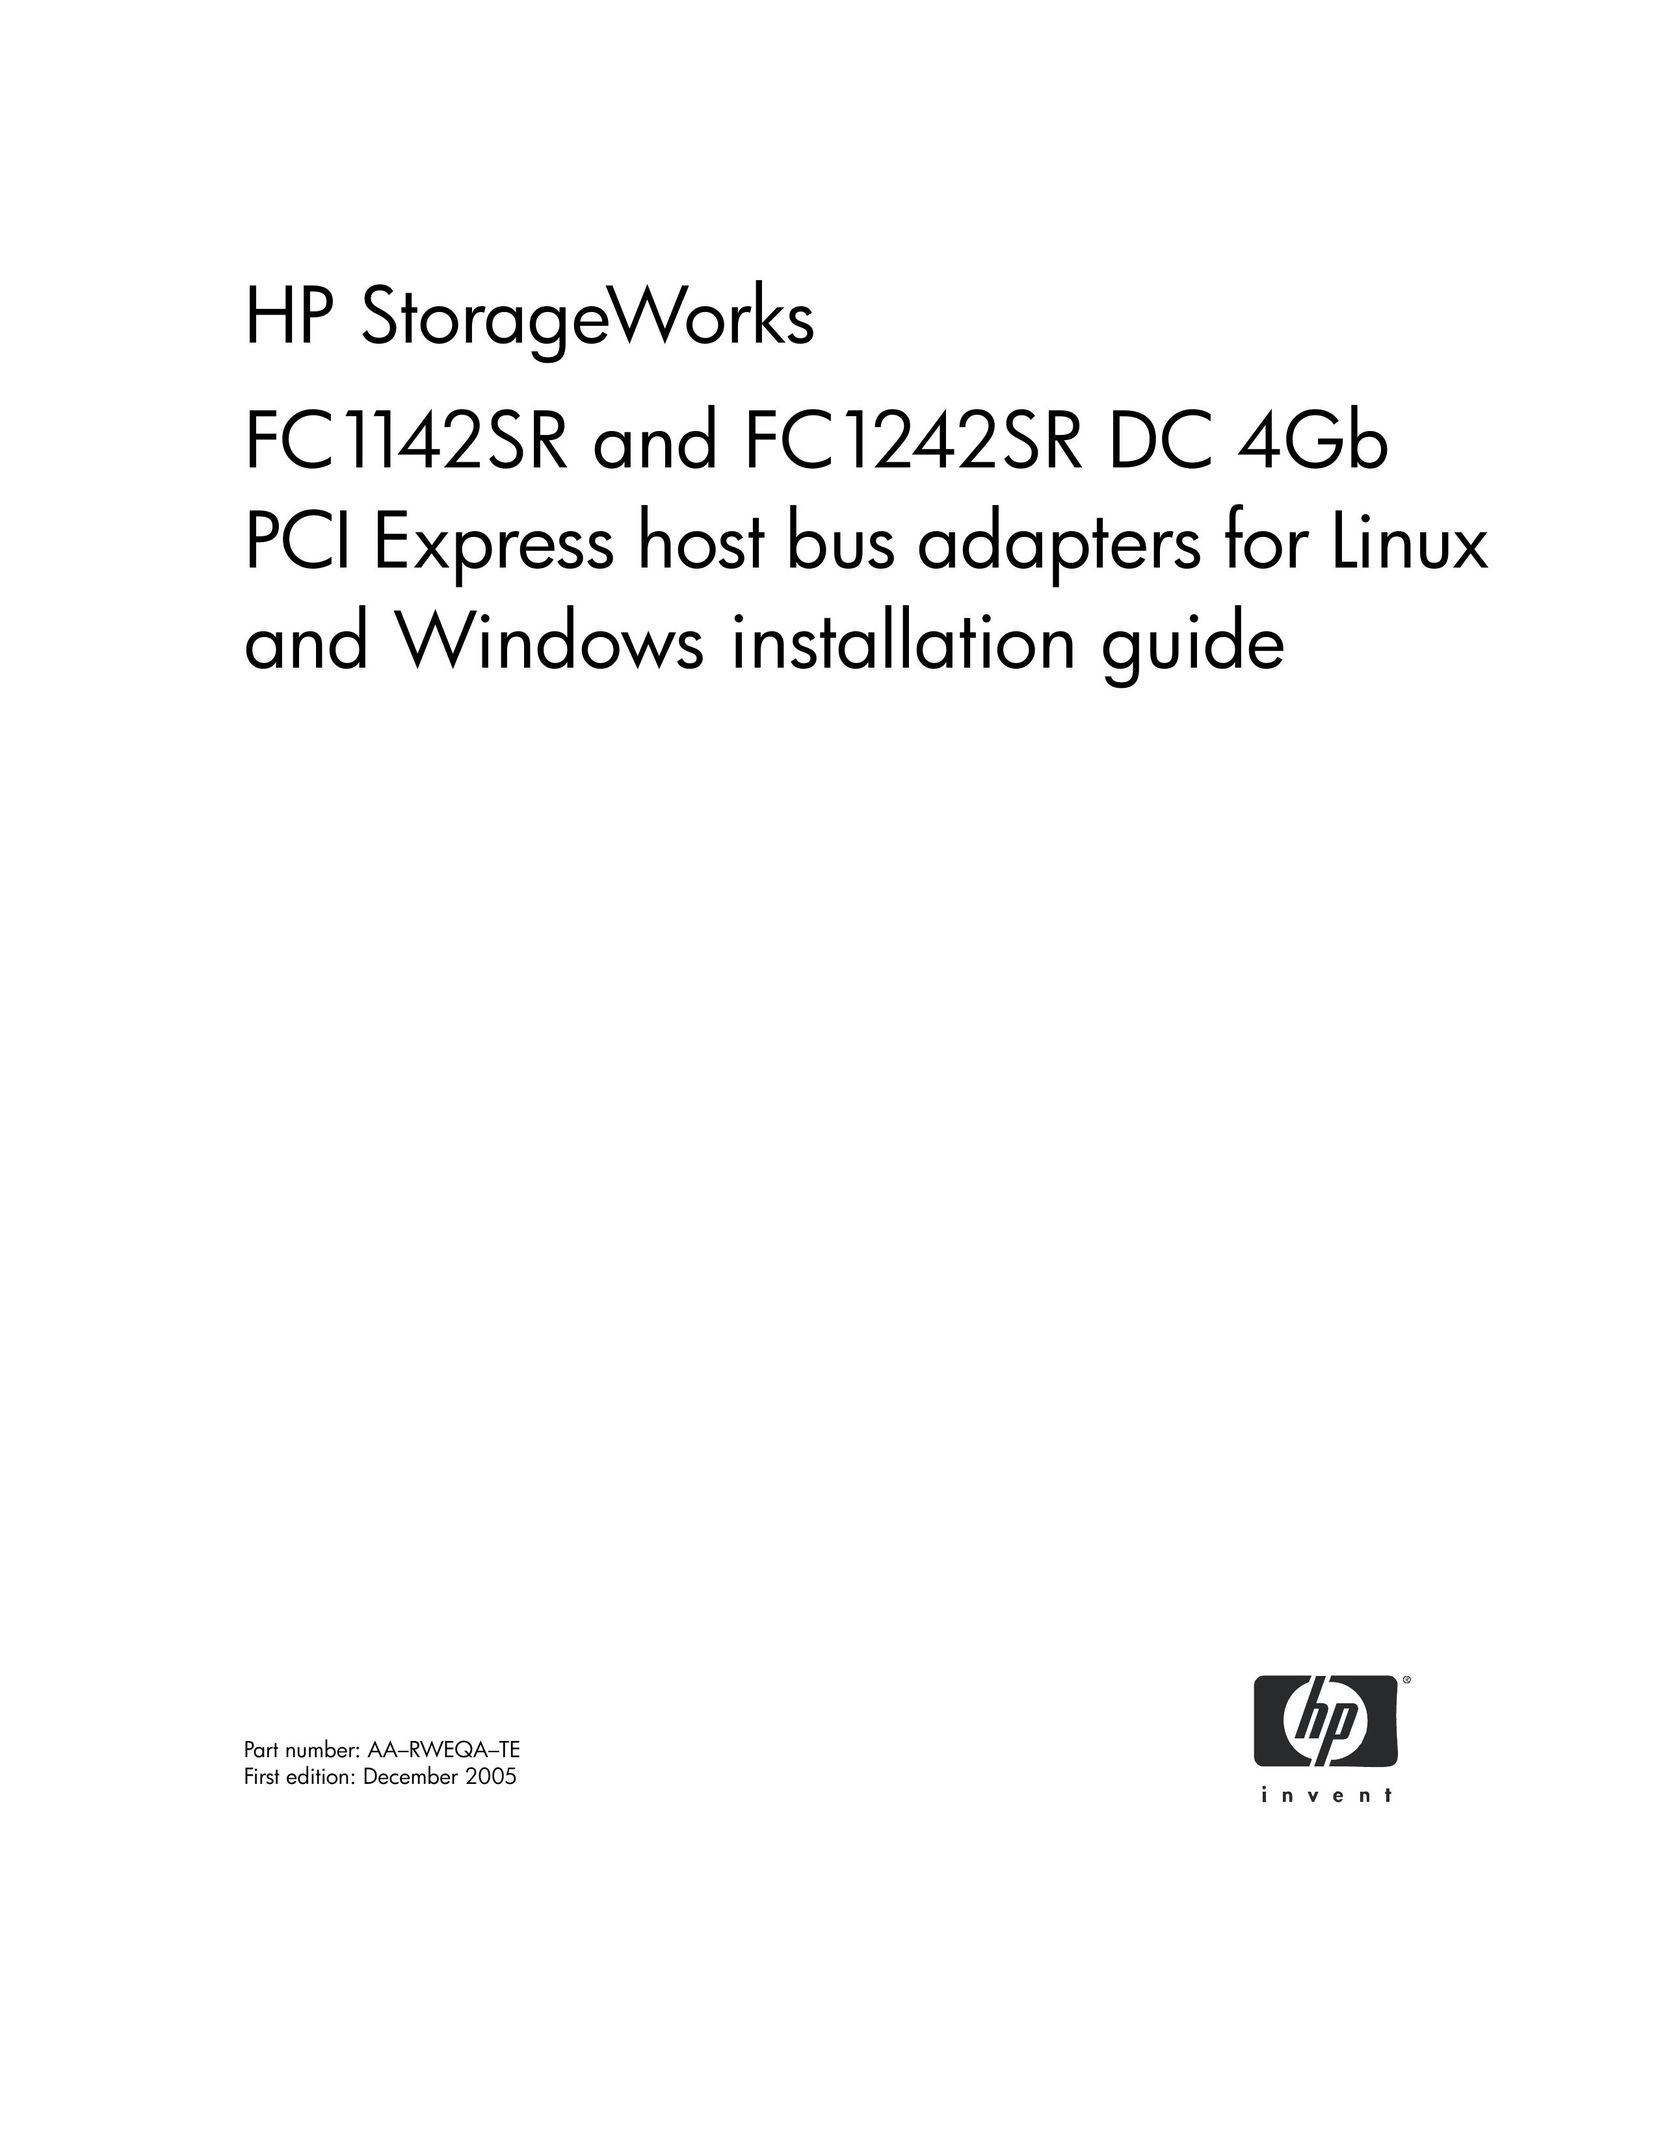 HP (Hewlett-Packard) FC1242SR Computer Hardware User Manual